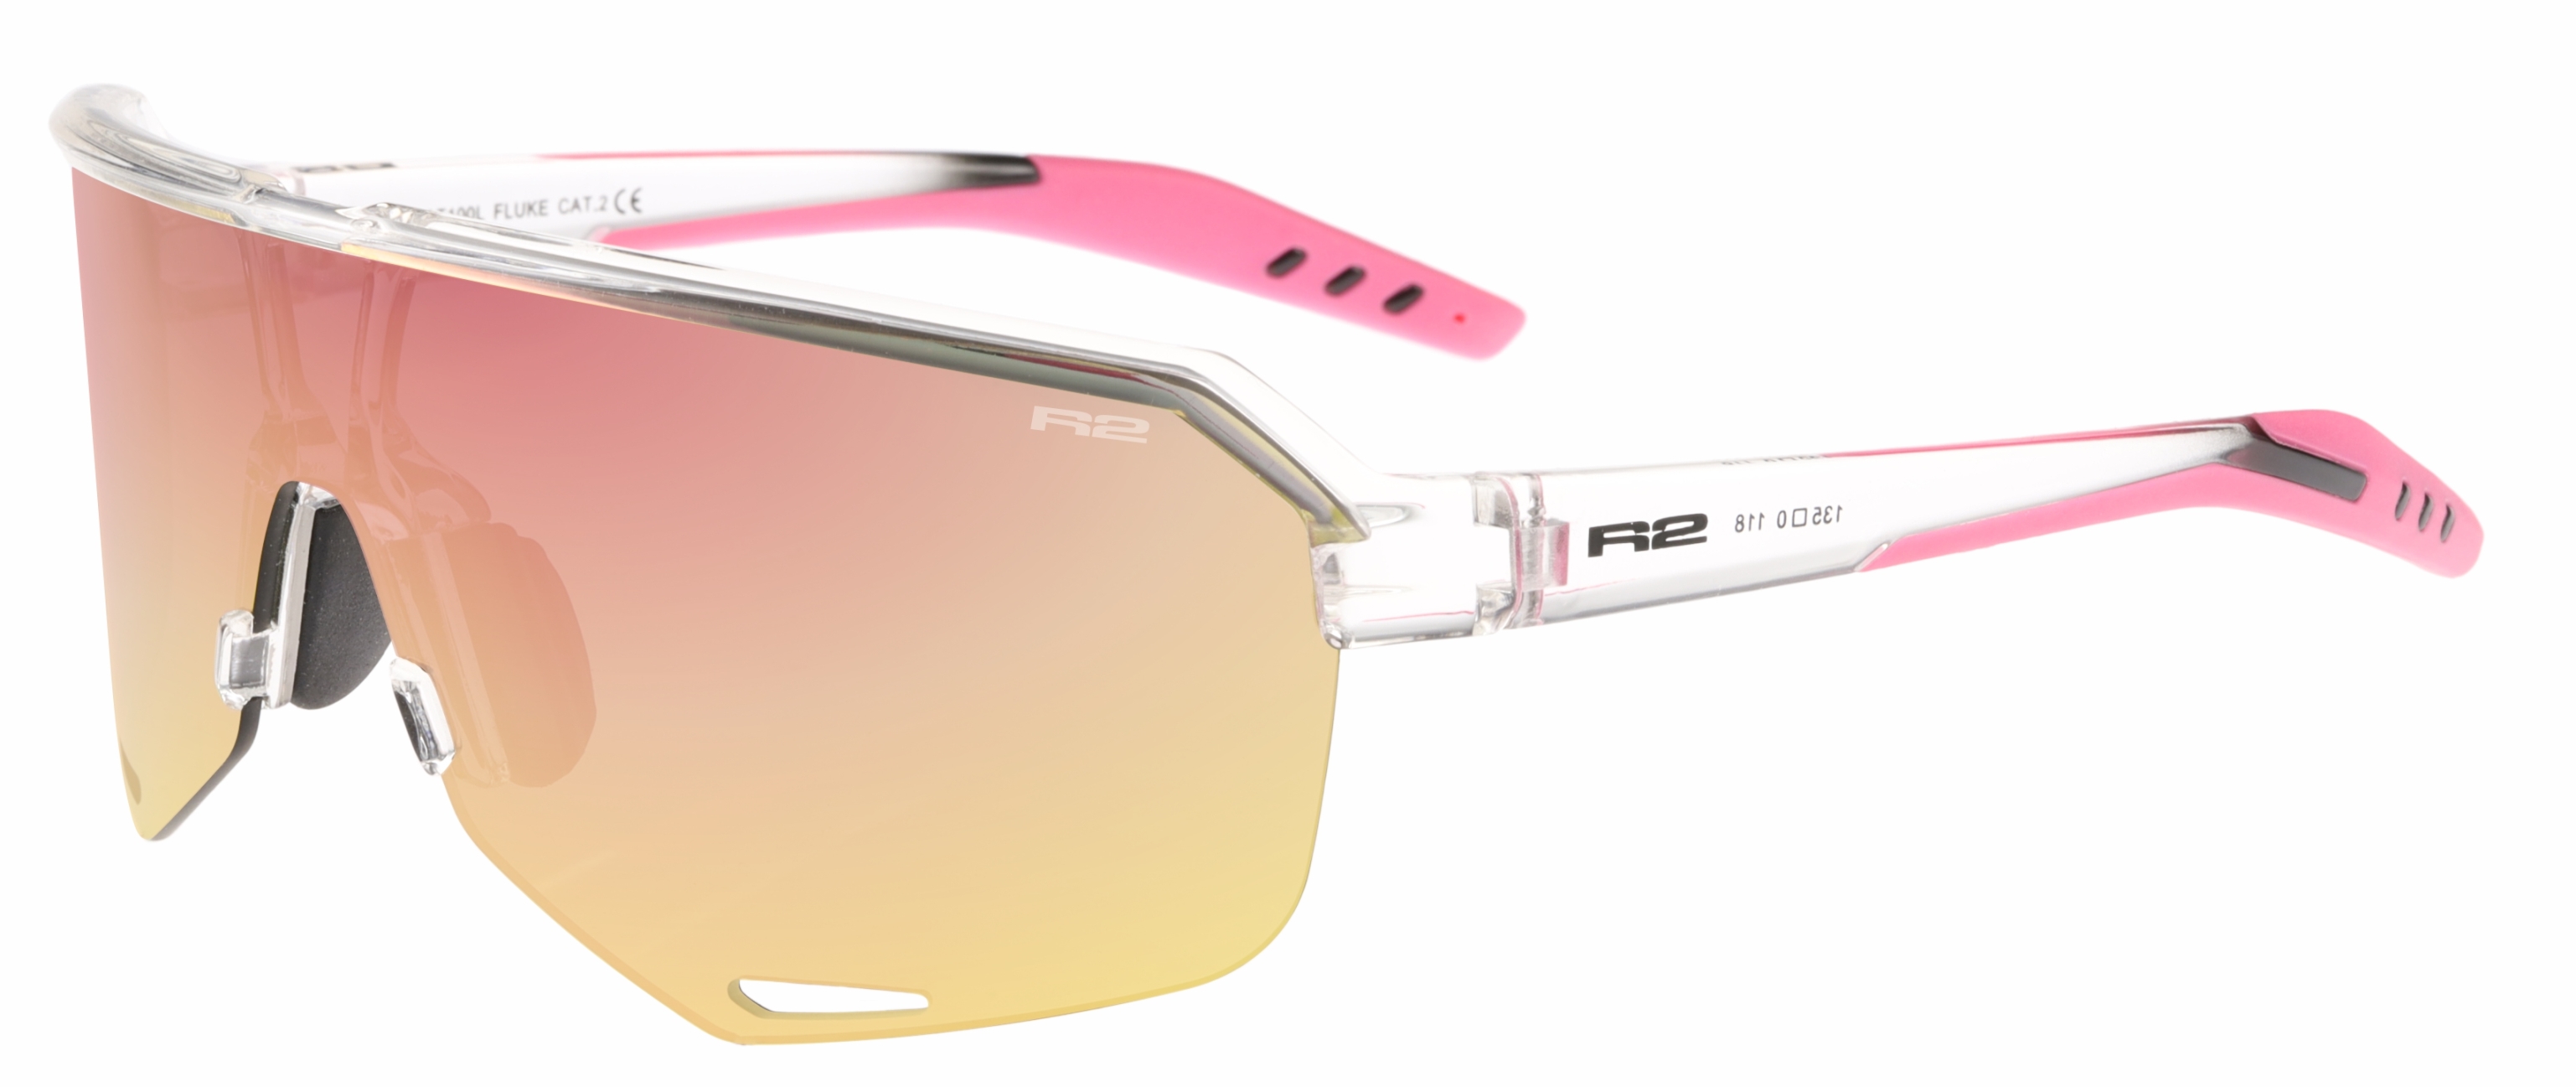 Sport sunglasses R2 FLUKE AT100L